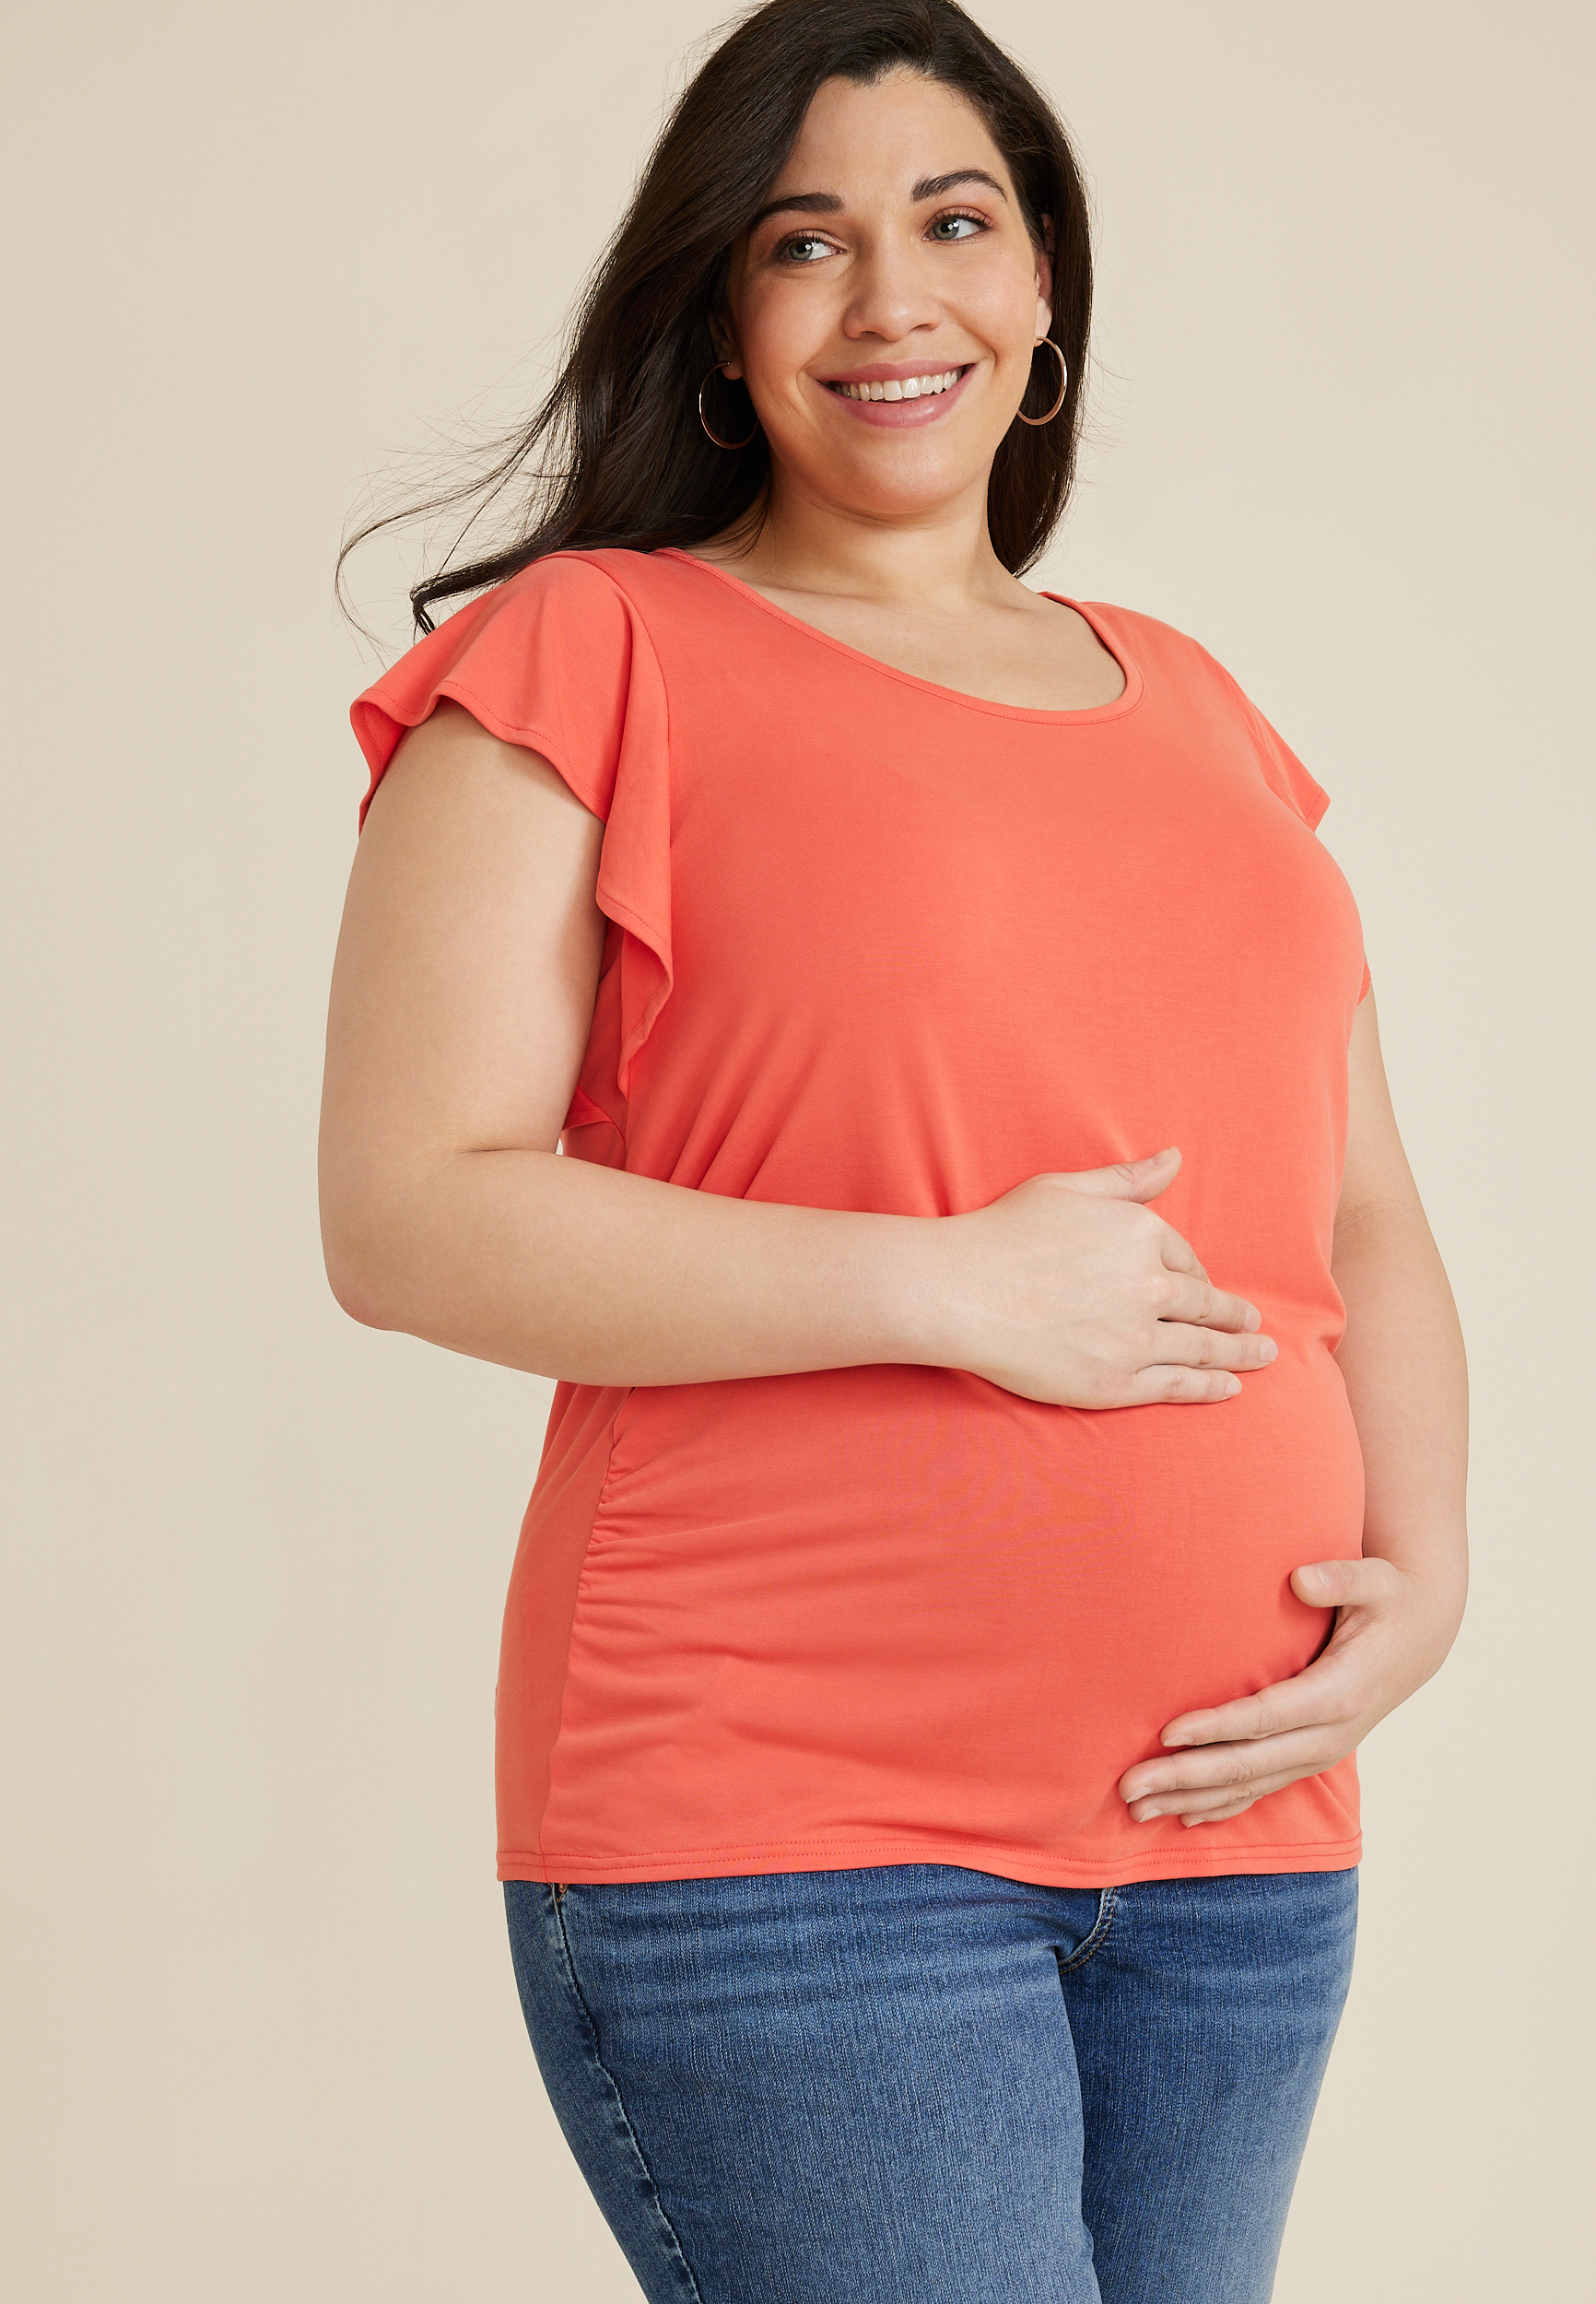 Women's Plus size Maternity clothes (42-64) - Zizzifashion